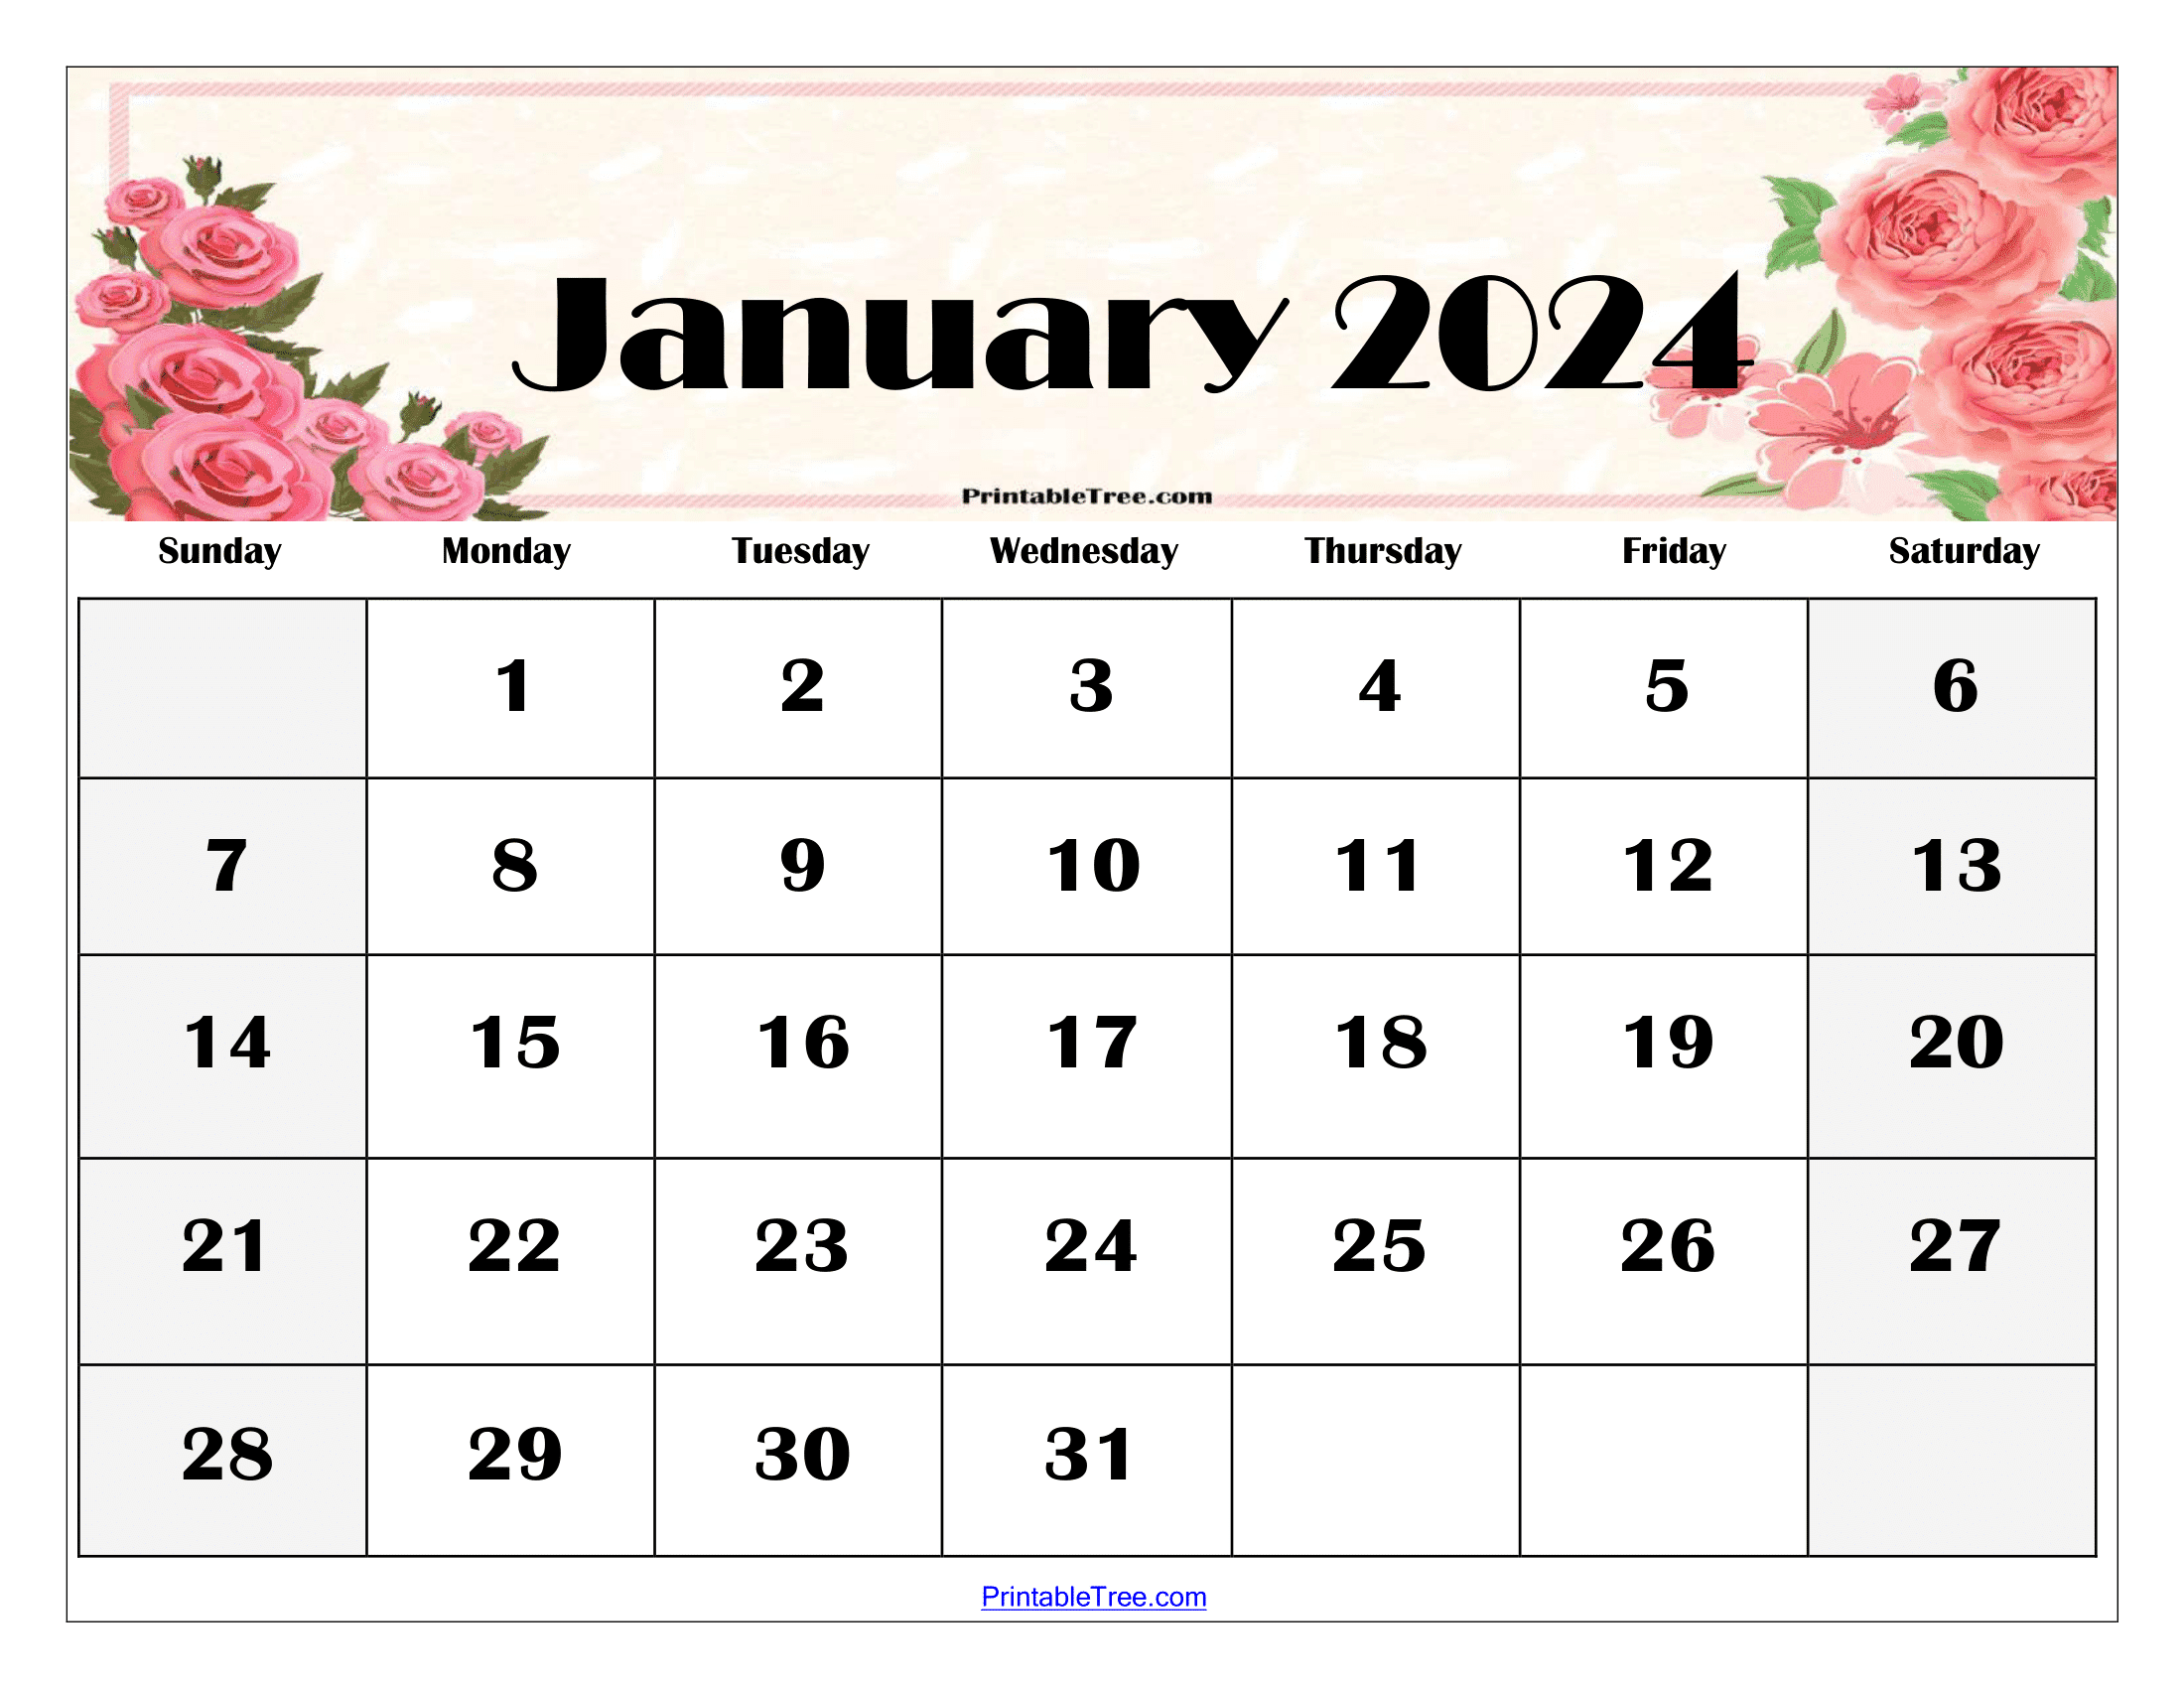 January 2024 Calendar Printable PDF Template With Holidays - Free Printable 2024 January Calendar With Usa And Jewish Holidays